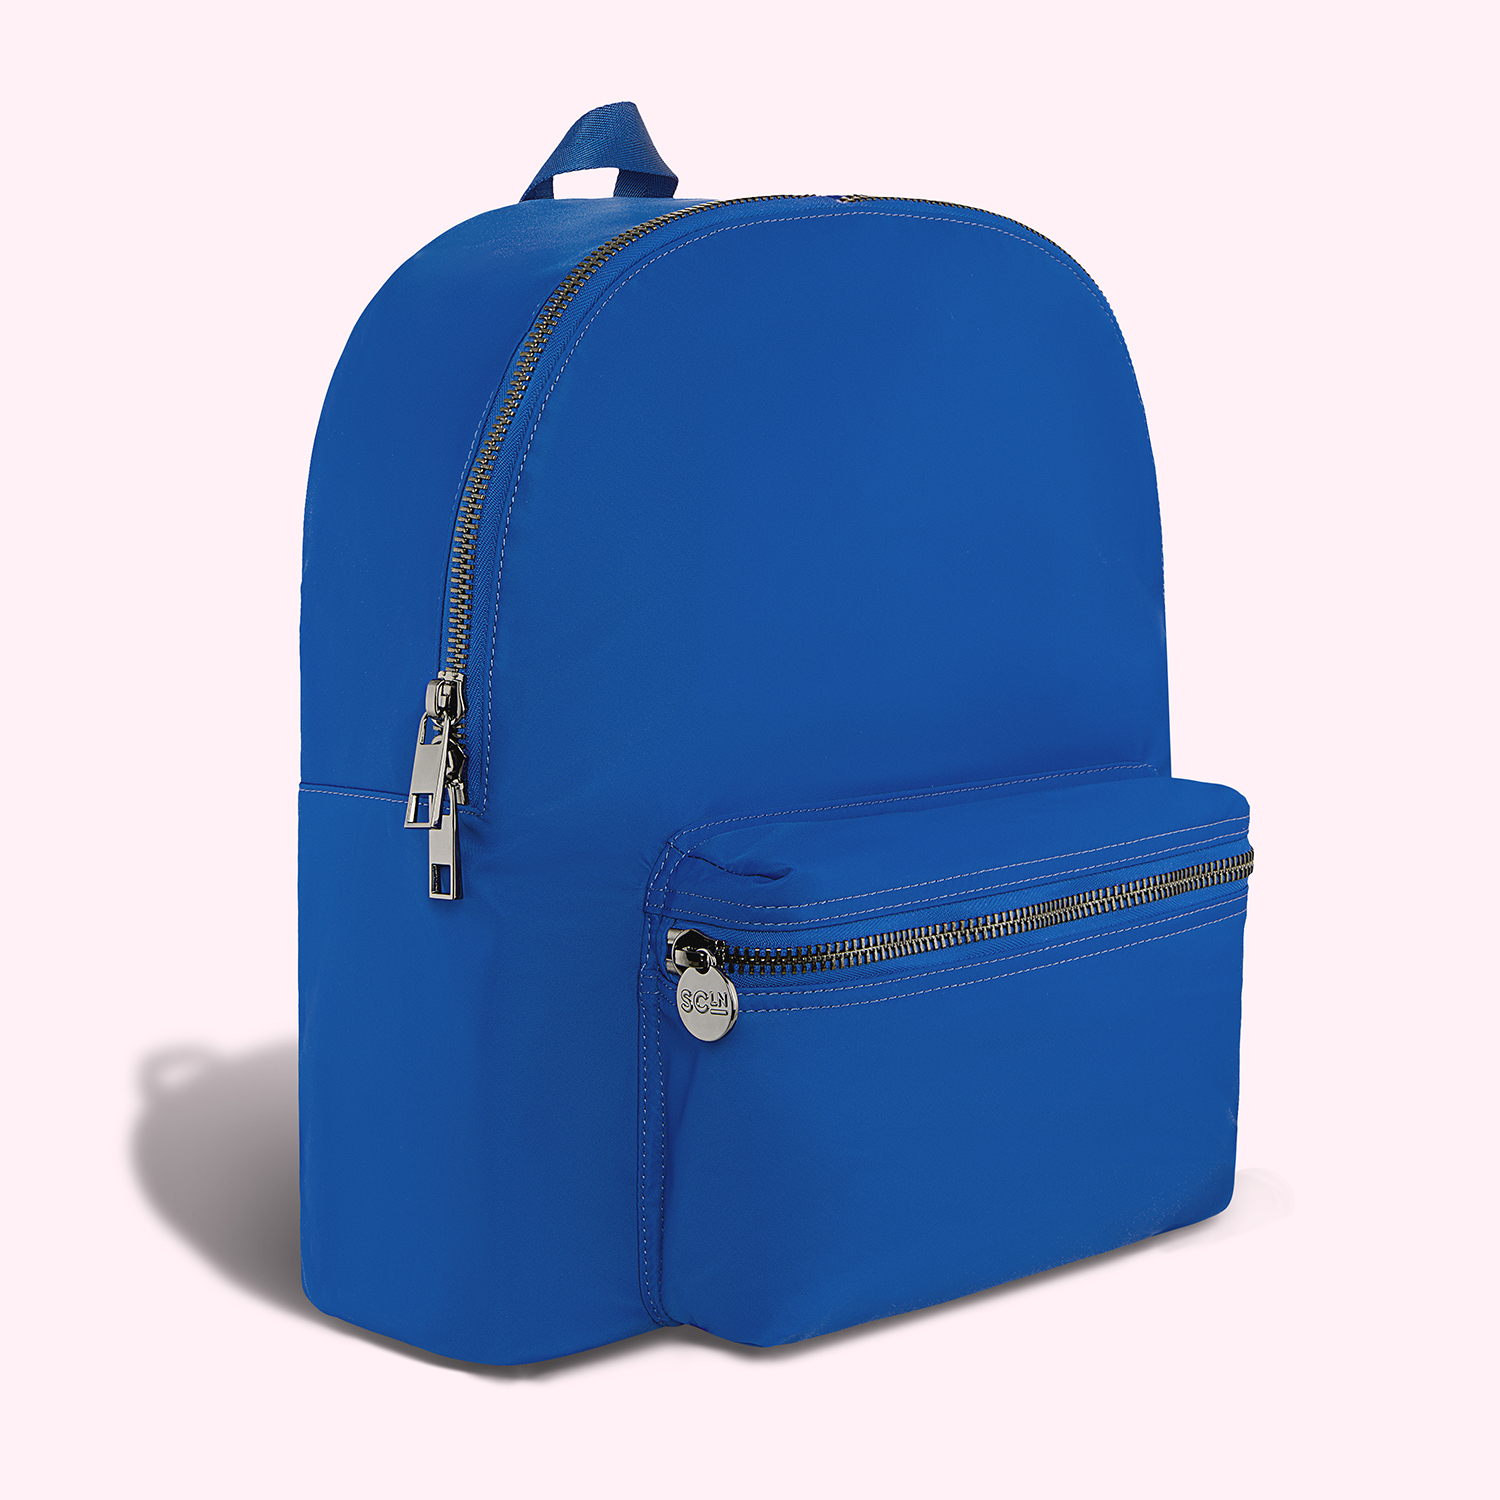 Shop Cln Official Store Backpack online